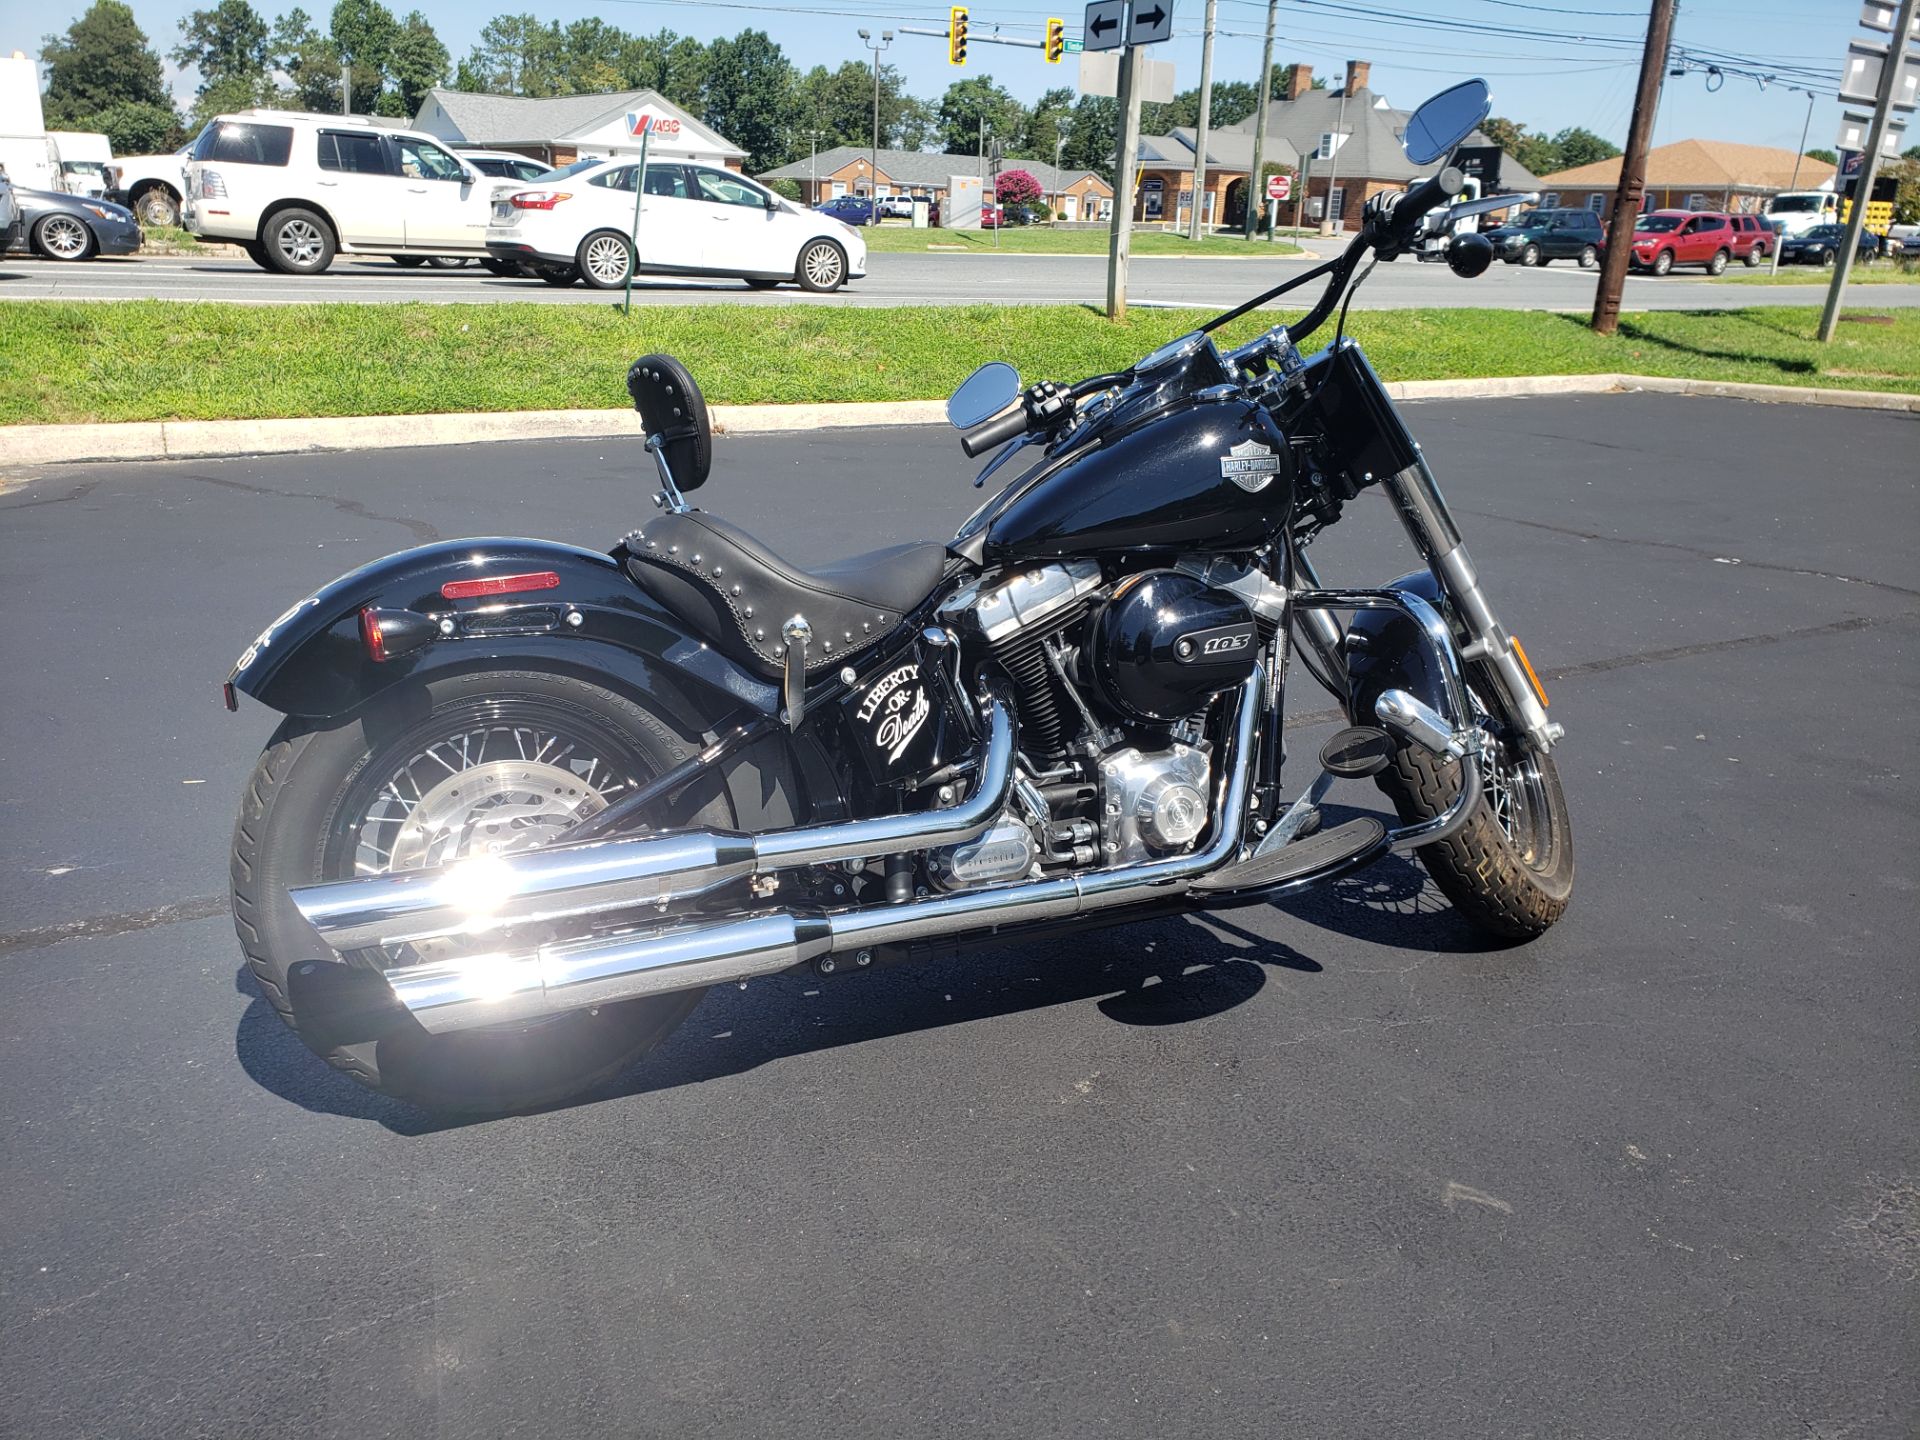 2017 Harley-Davidson Softail Slim® in Lynchburg, Virginia - Photo 9